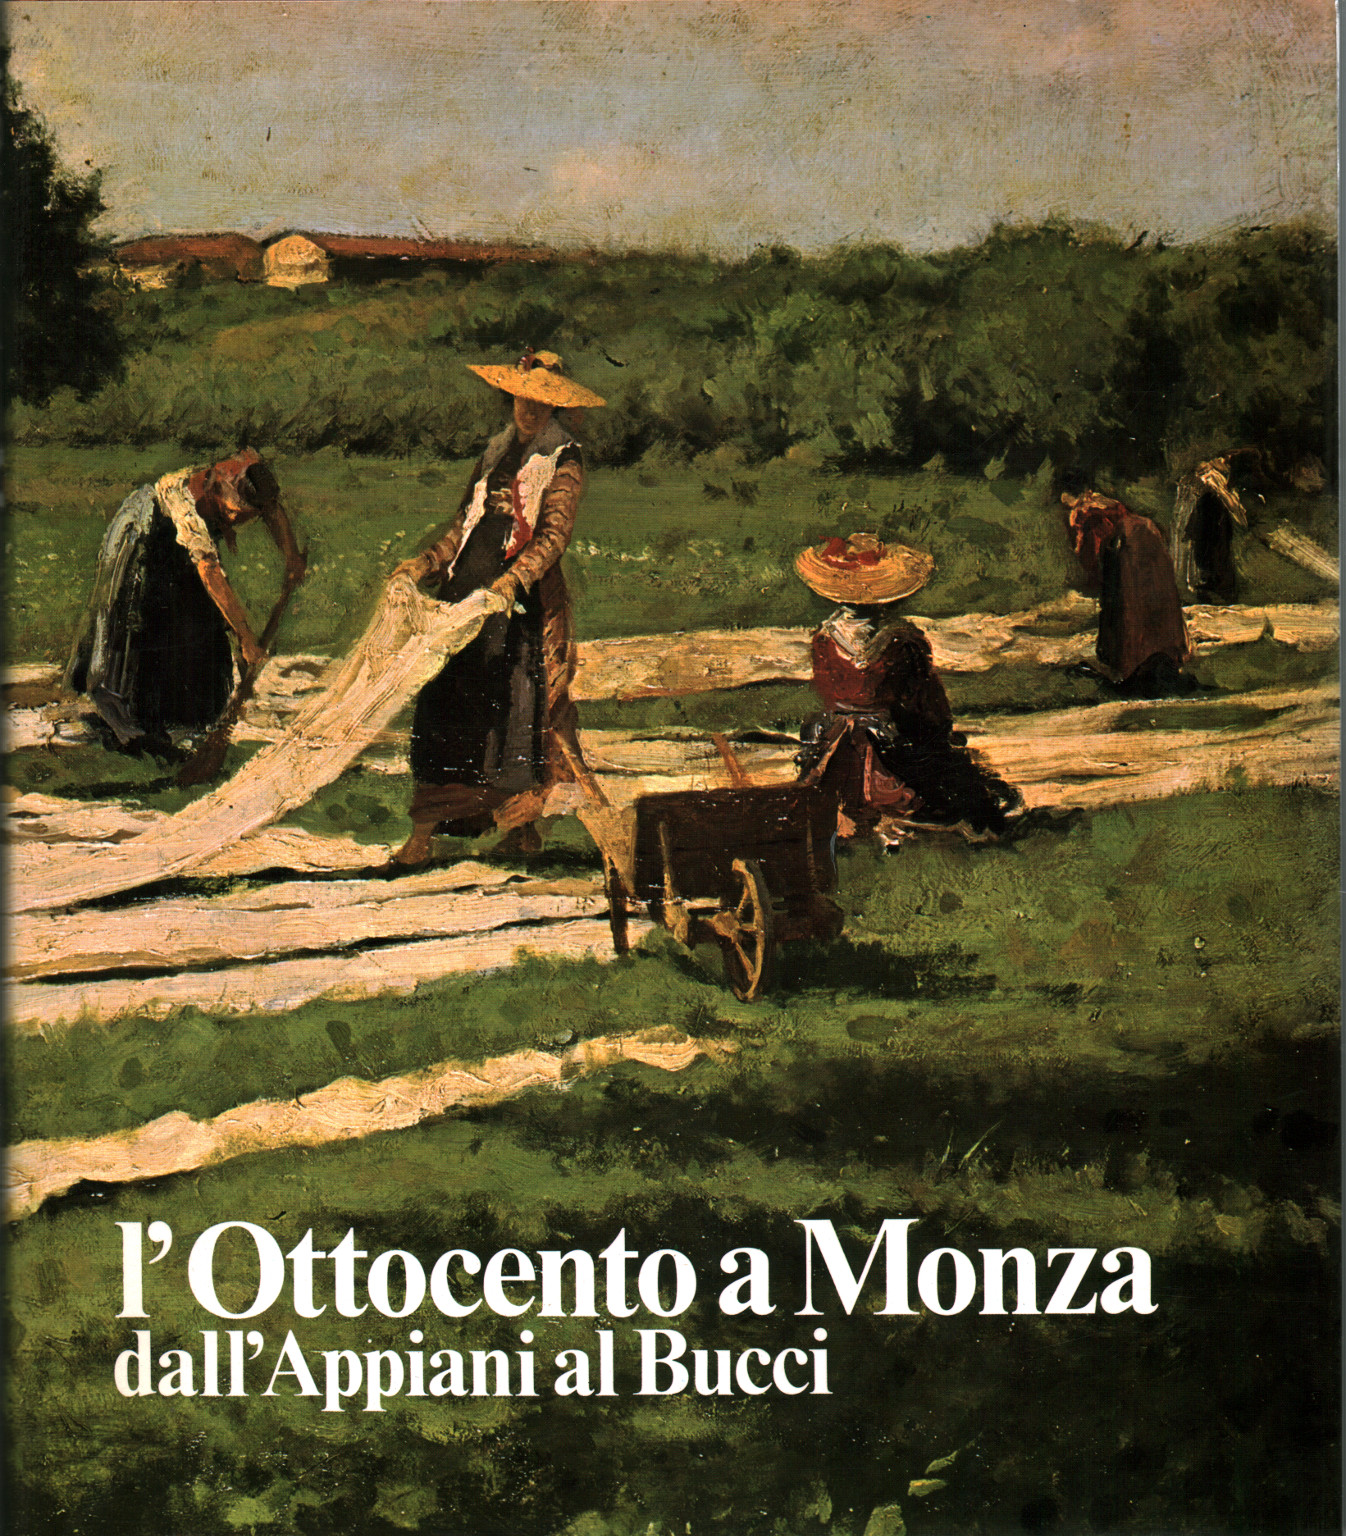 El siglo XIX en Monza por Appiani al Bucci, s.a.